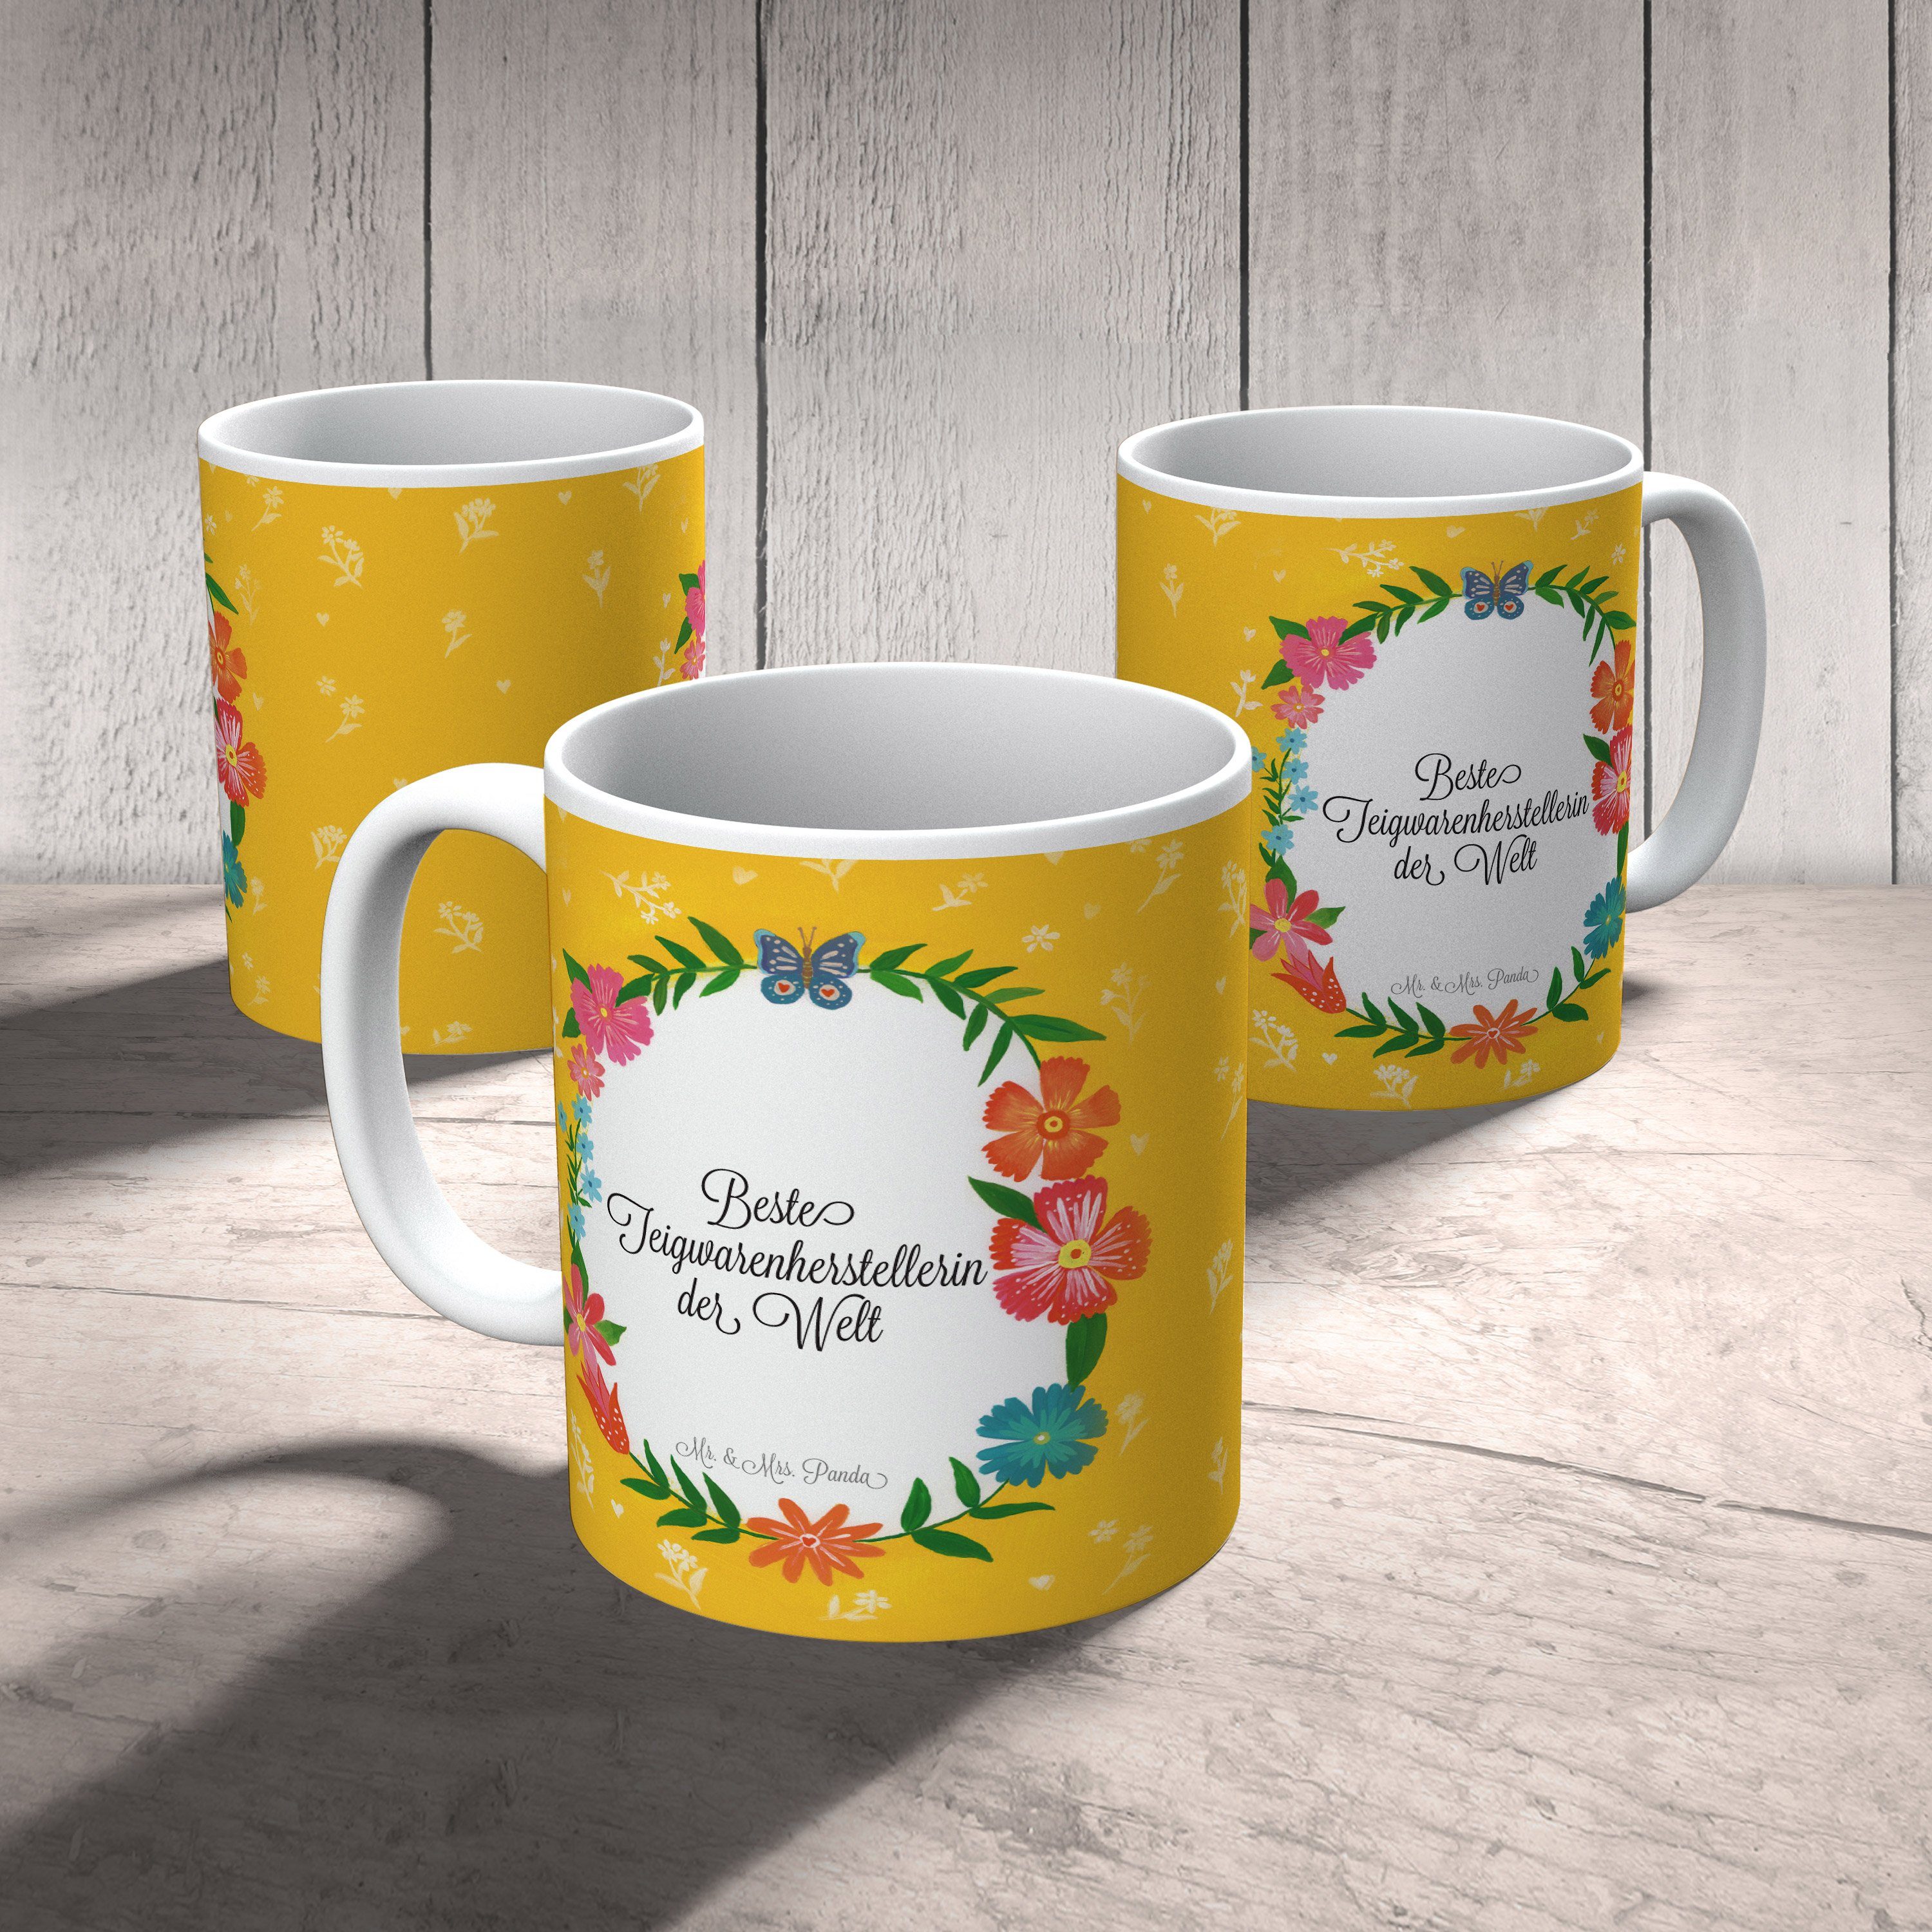 Tasse, Geschenk, Bachelor, Tasse Mr. Ausbildu, & Teetasse, - Keramik Teigwarenherstellerin Mrs. Panda